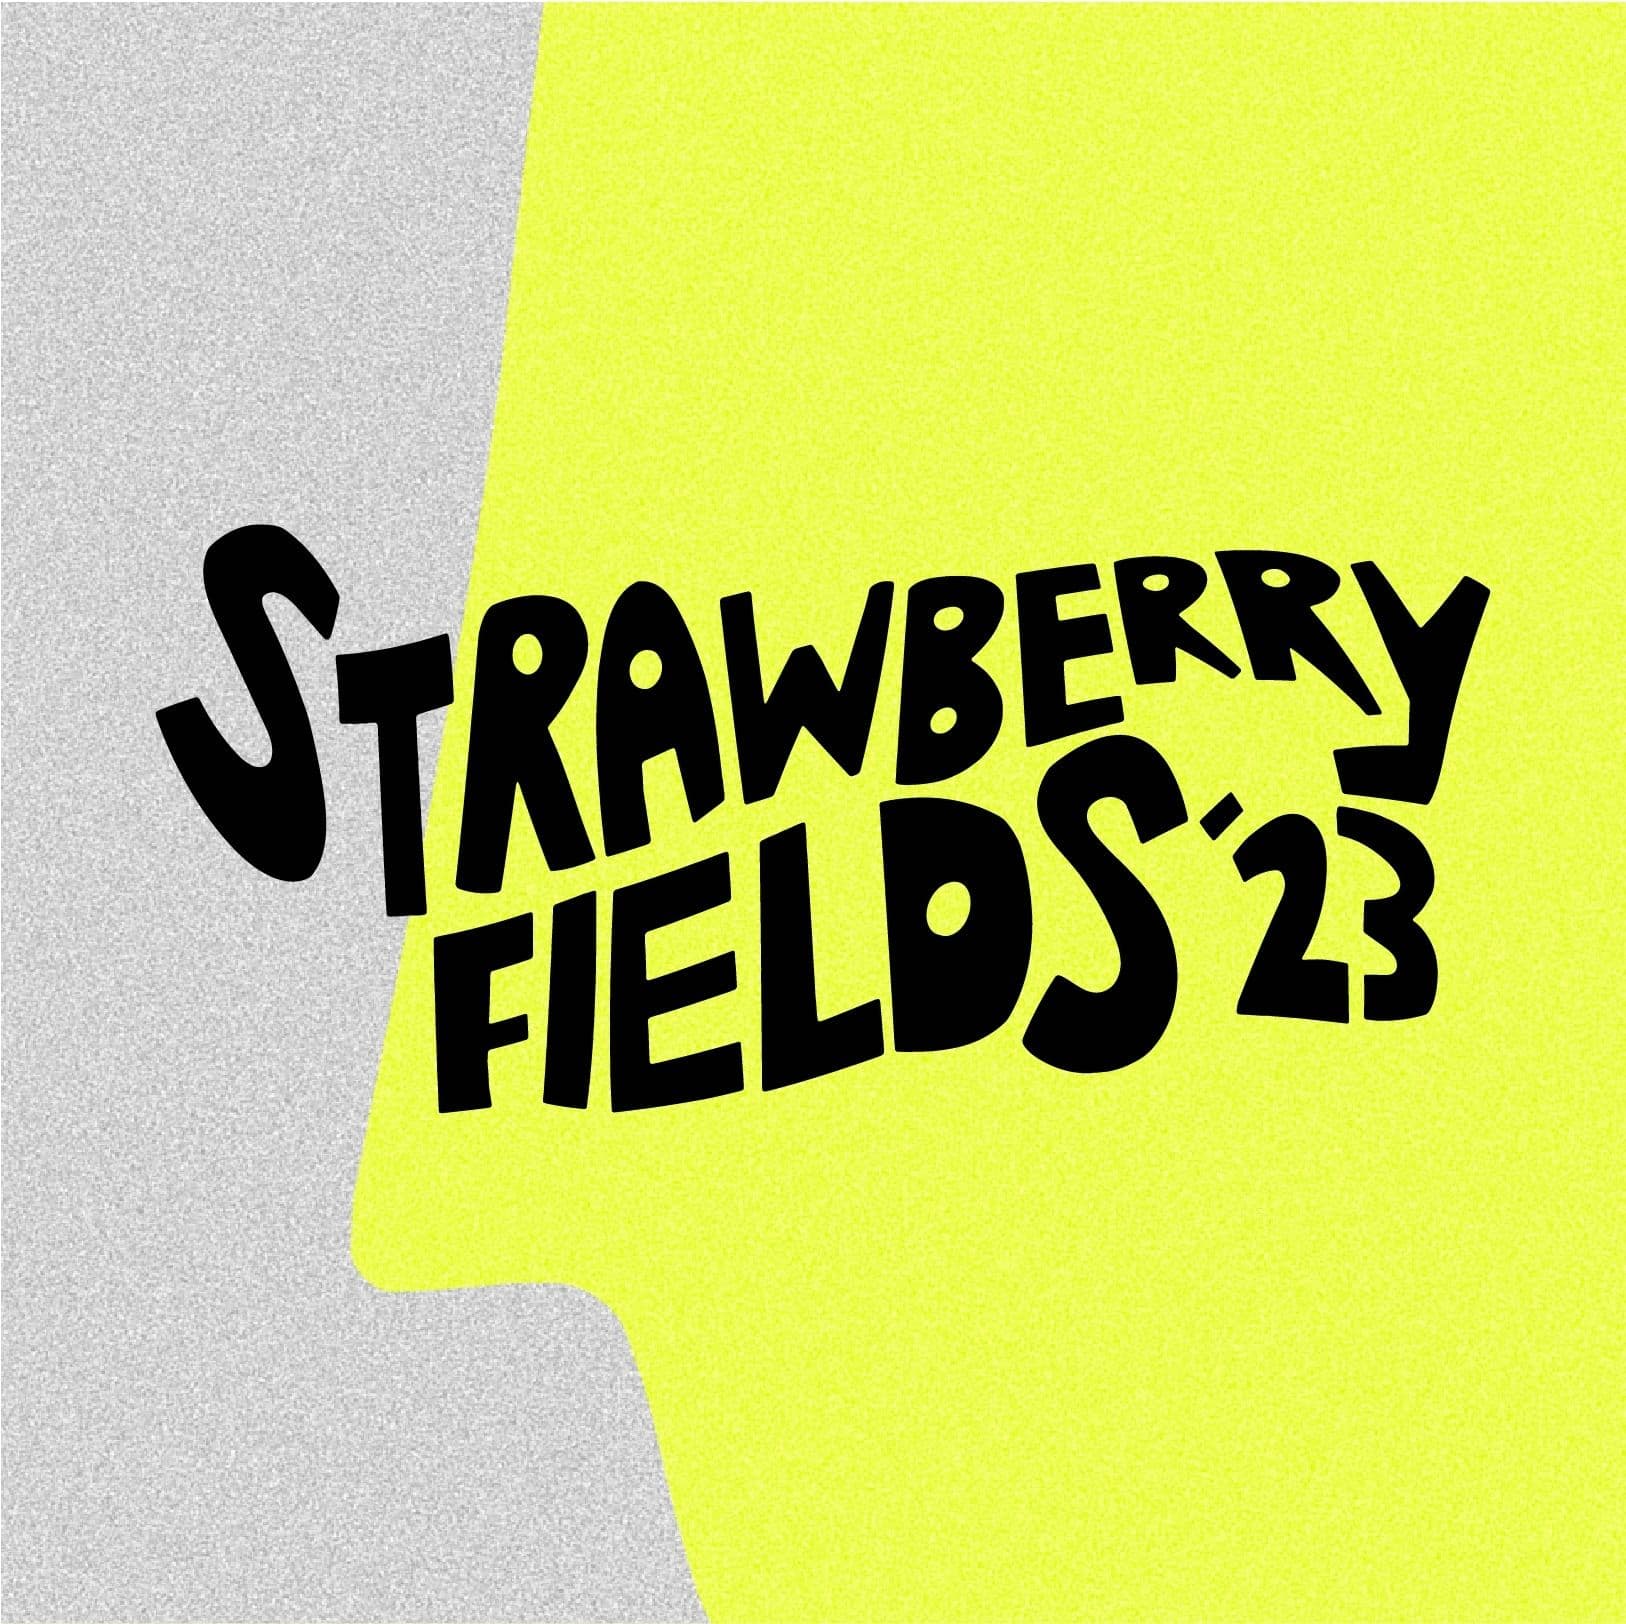 Strawberry Fields 2023 Ticket Ballot Now Open